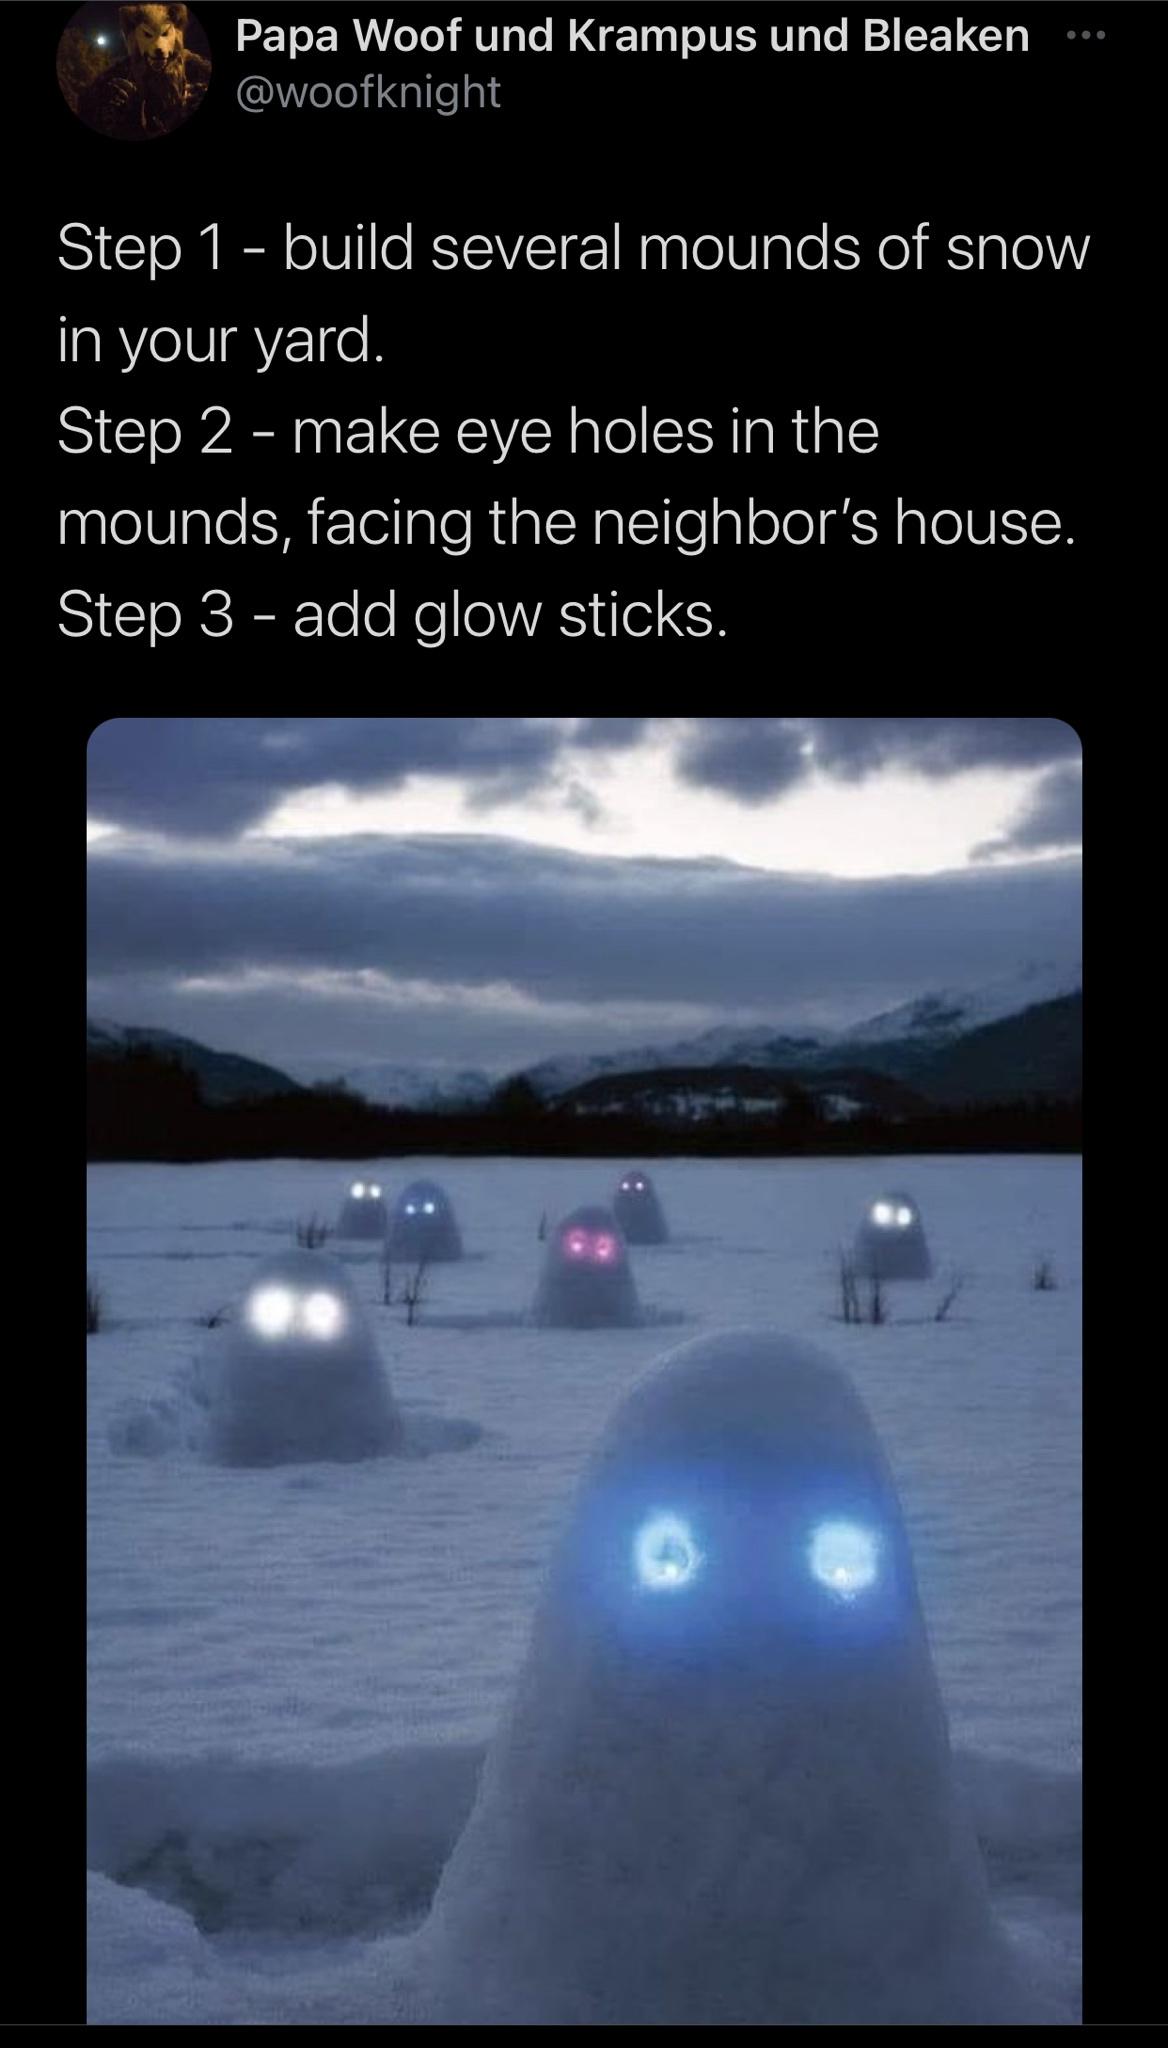 alien snowmen glow sticks - Papa Woof und Krampus und Bleaken Step 1 build several mounds of snow in your yard. Step 2 make eye holes in the mounds, facing the neighbor's house. Step 3 add glow sticks.